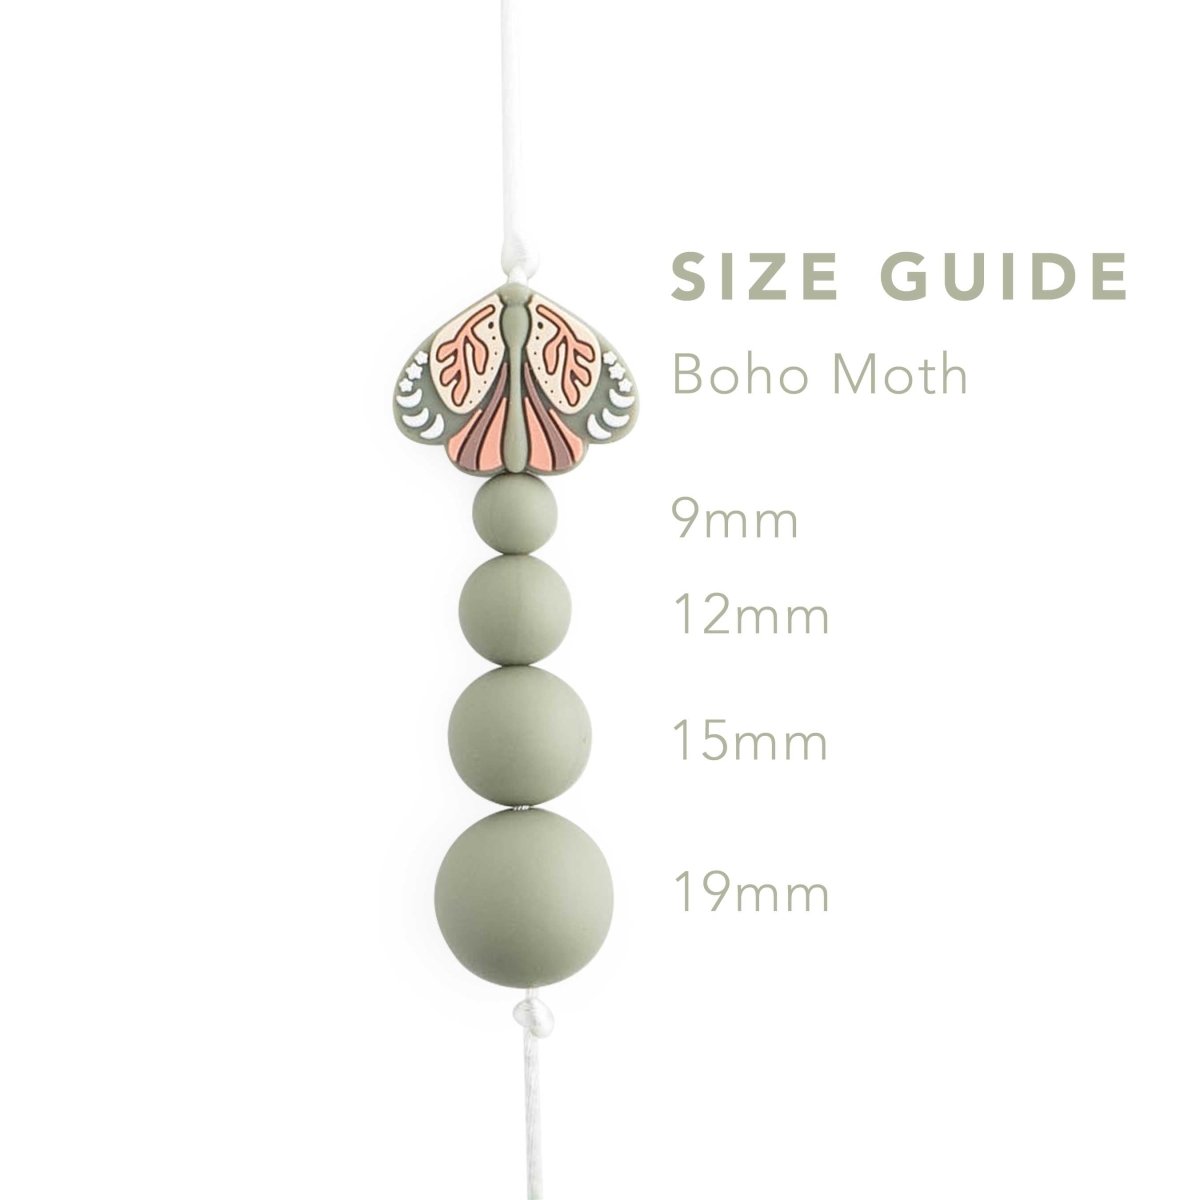 Boho Moth Silicone Focal Beads